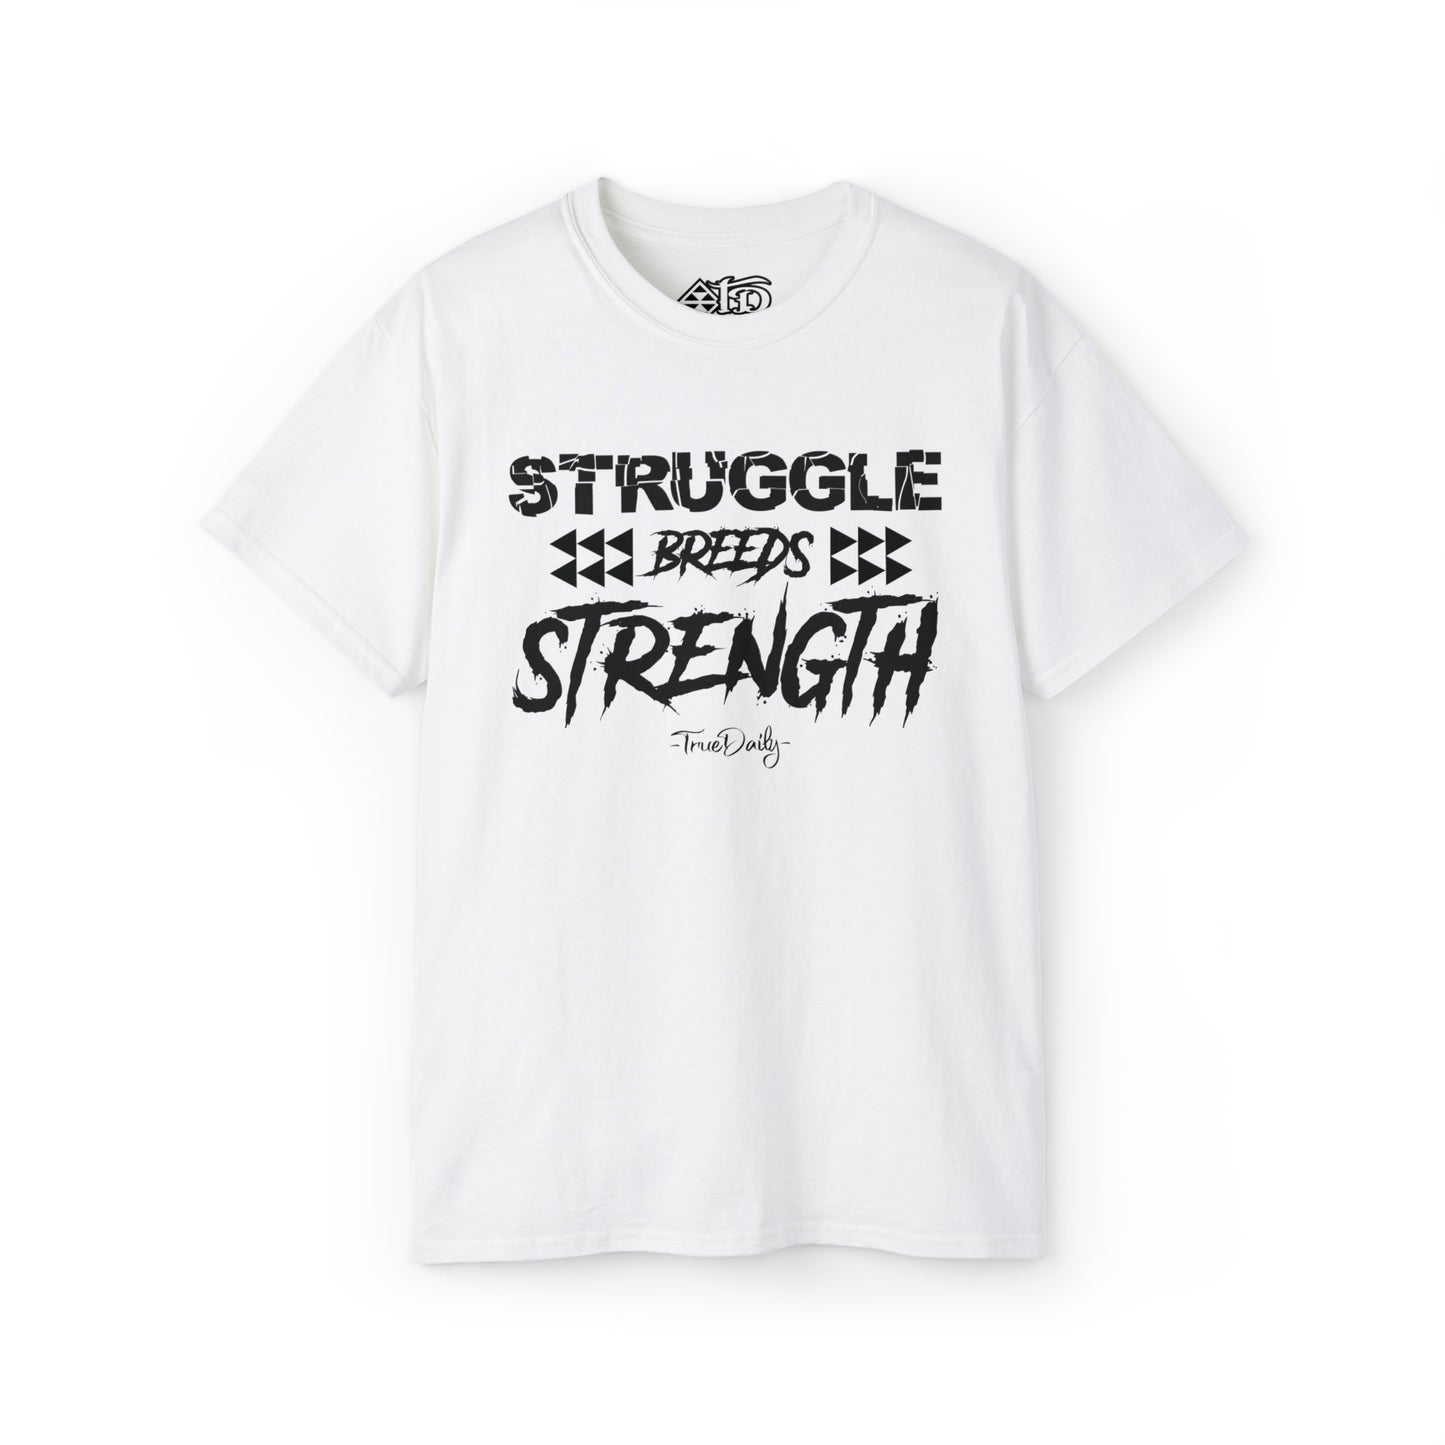 Struggle Breeds Strength - Ultra Cotton Tee